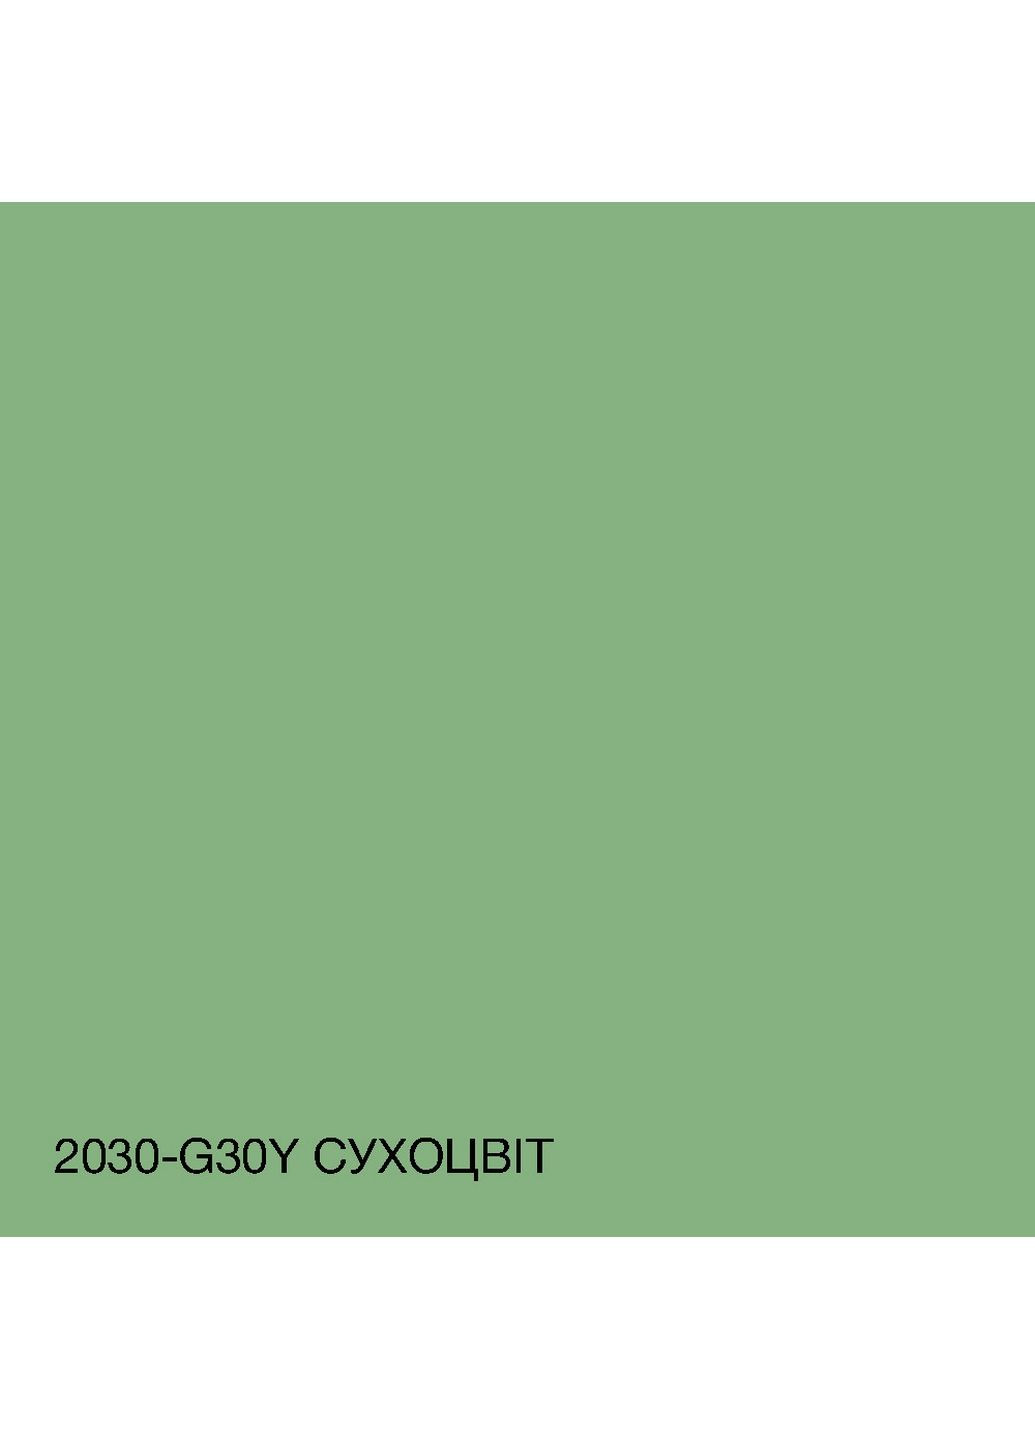 Краска Акрил-латексная Фасадная 2030-G30Y Сушеница 5л SkyLine (283327692)